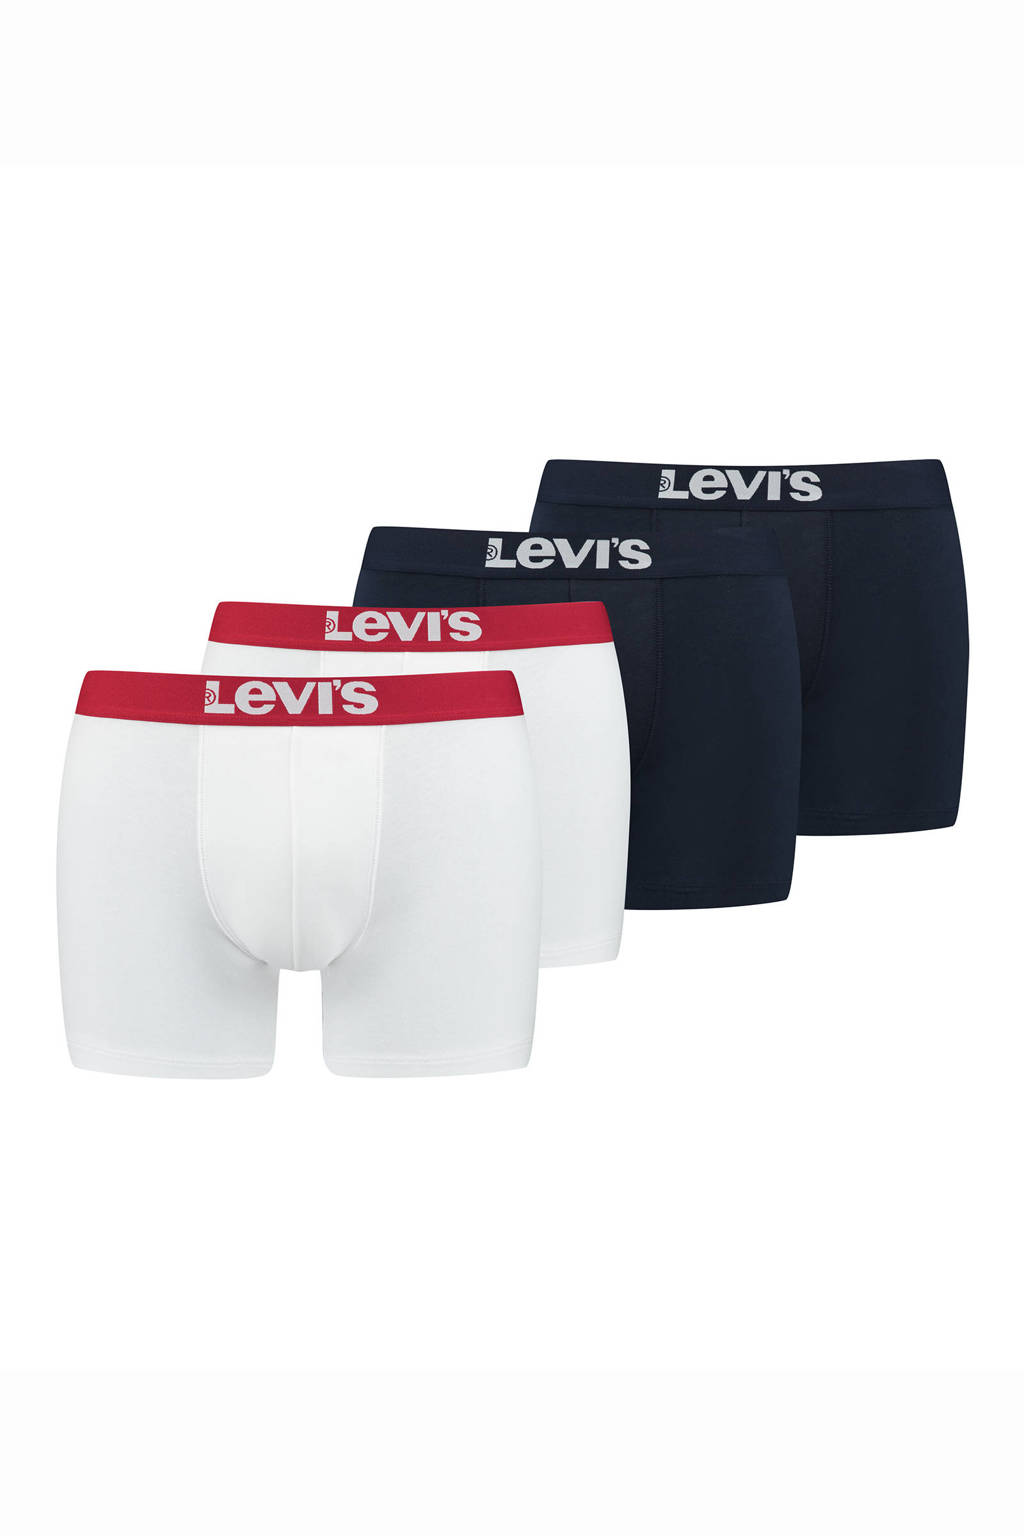 Levi's boxershort (set van 4), Wit/donkerblauw